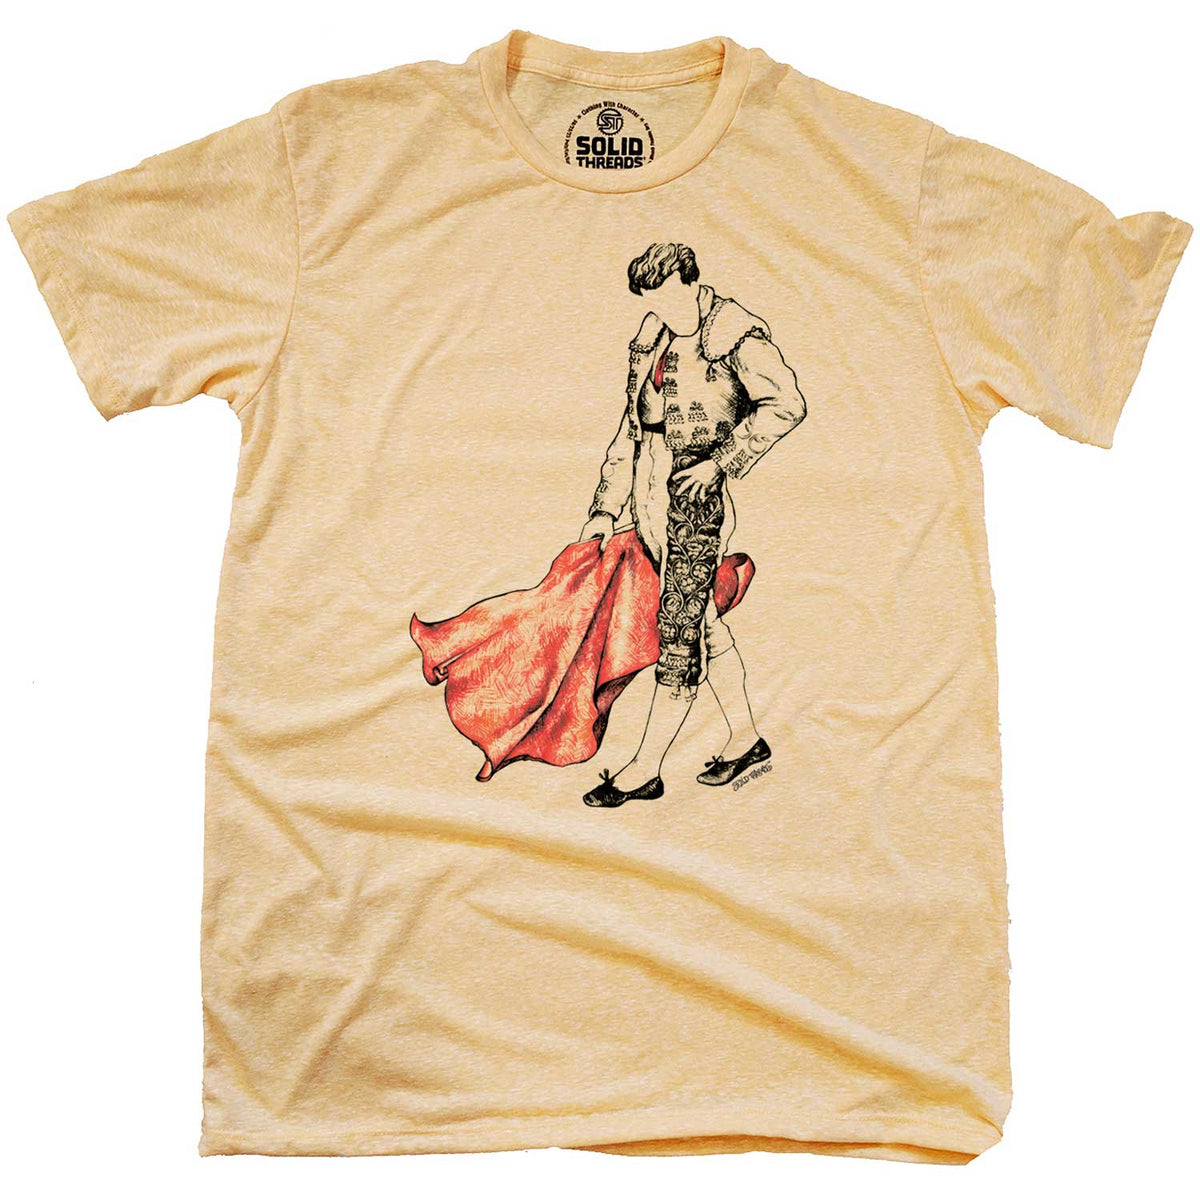 Men&#39;s Matador Cool Artsy Graphic T-Shirt | Vintage Bull Fighter Tee | Solid Threads